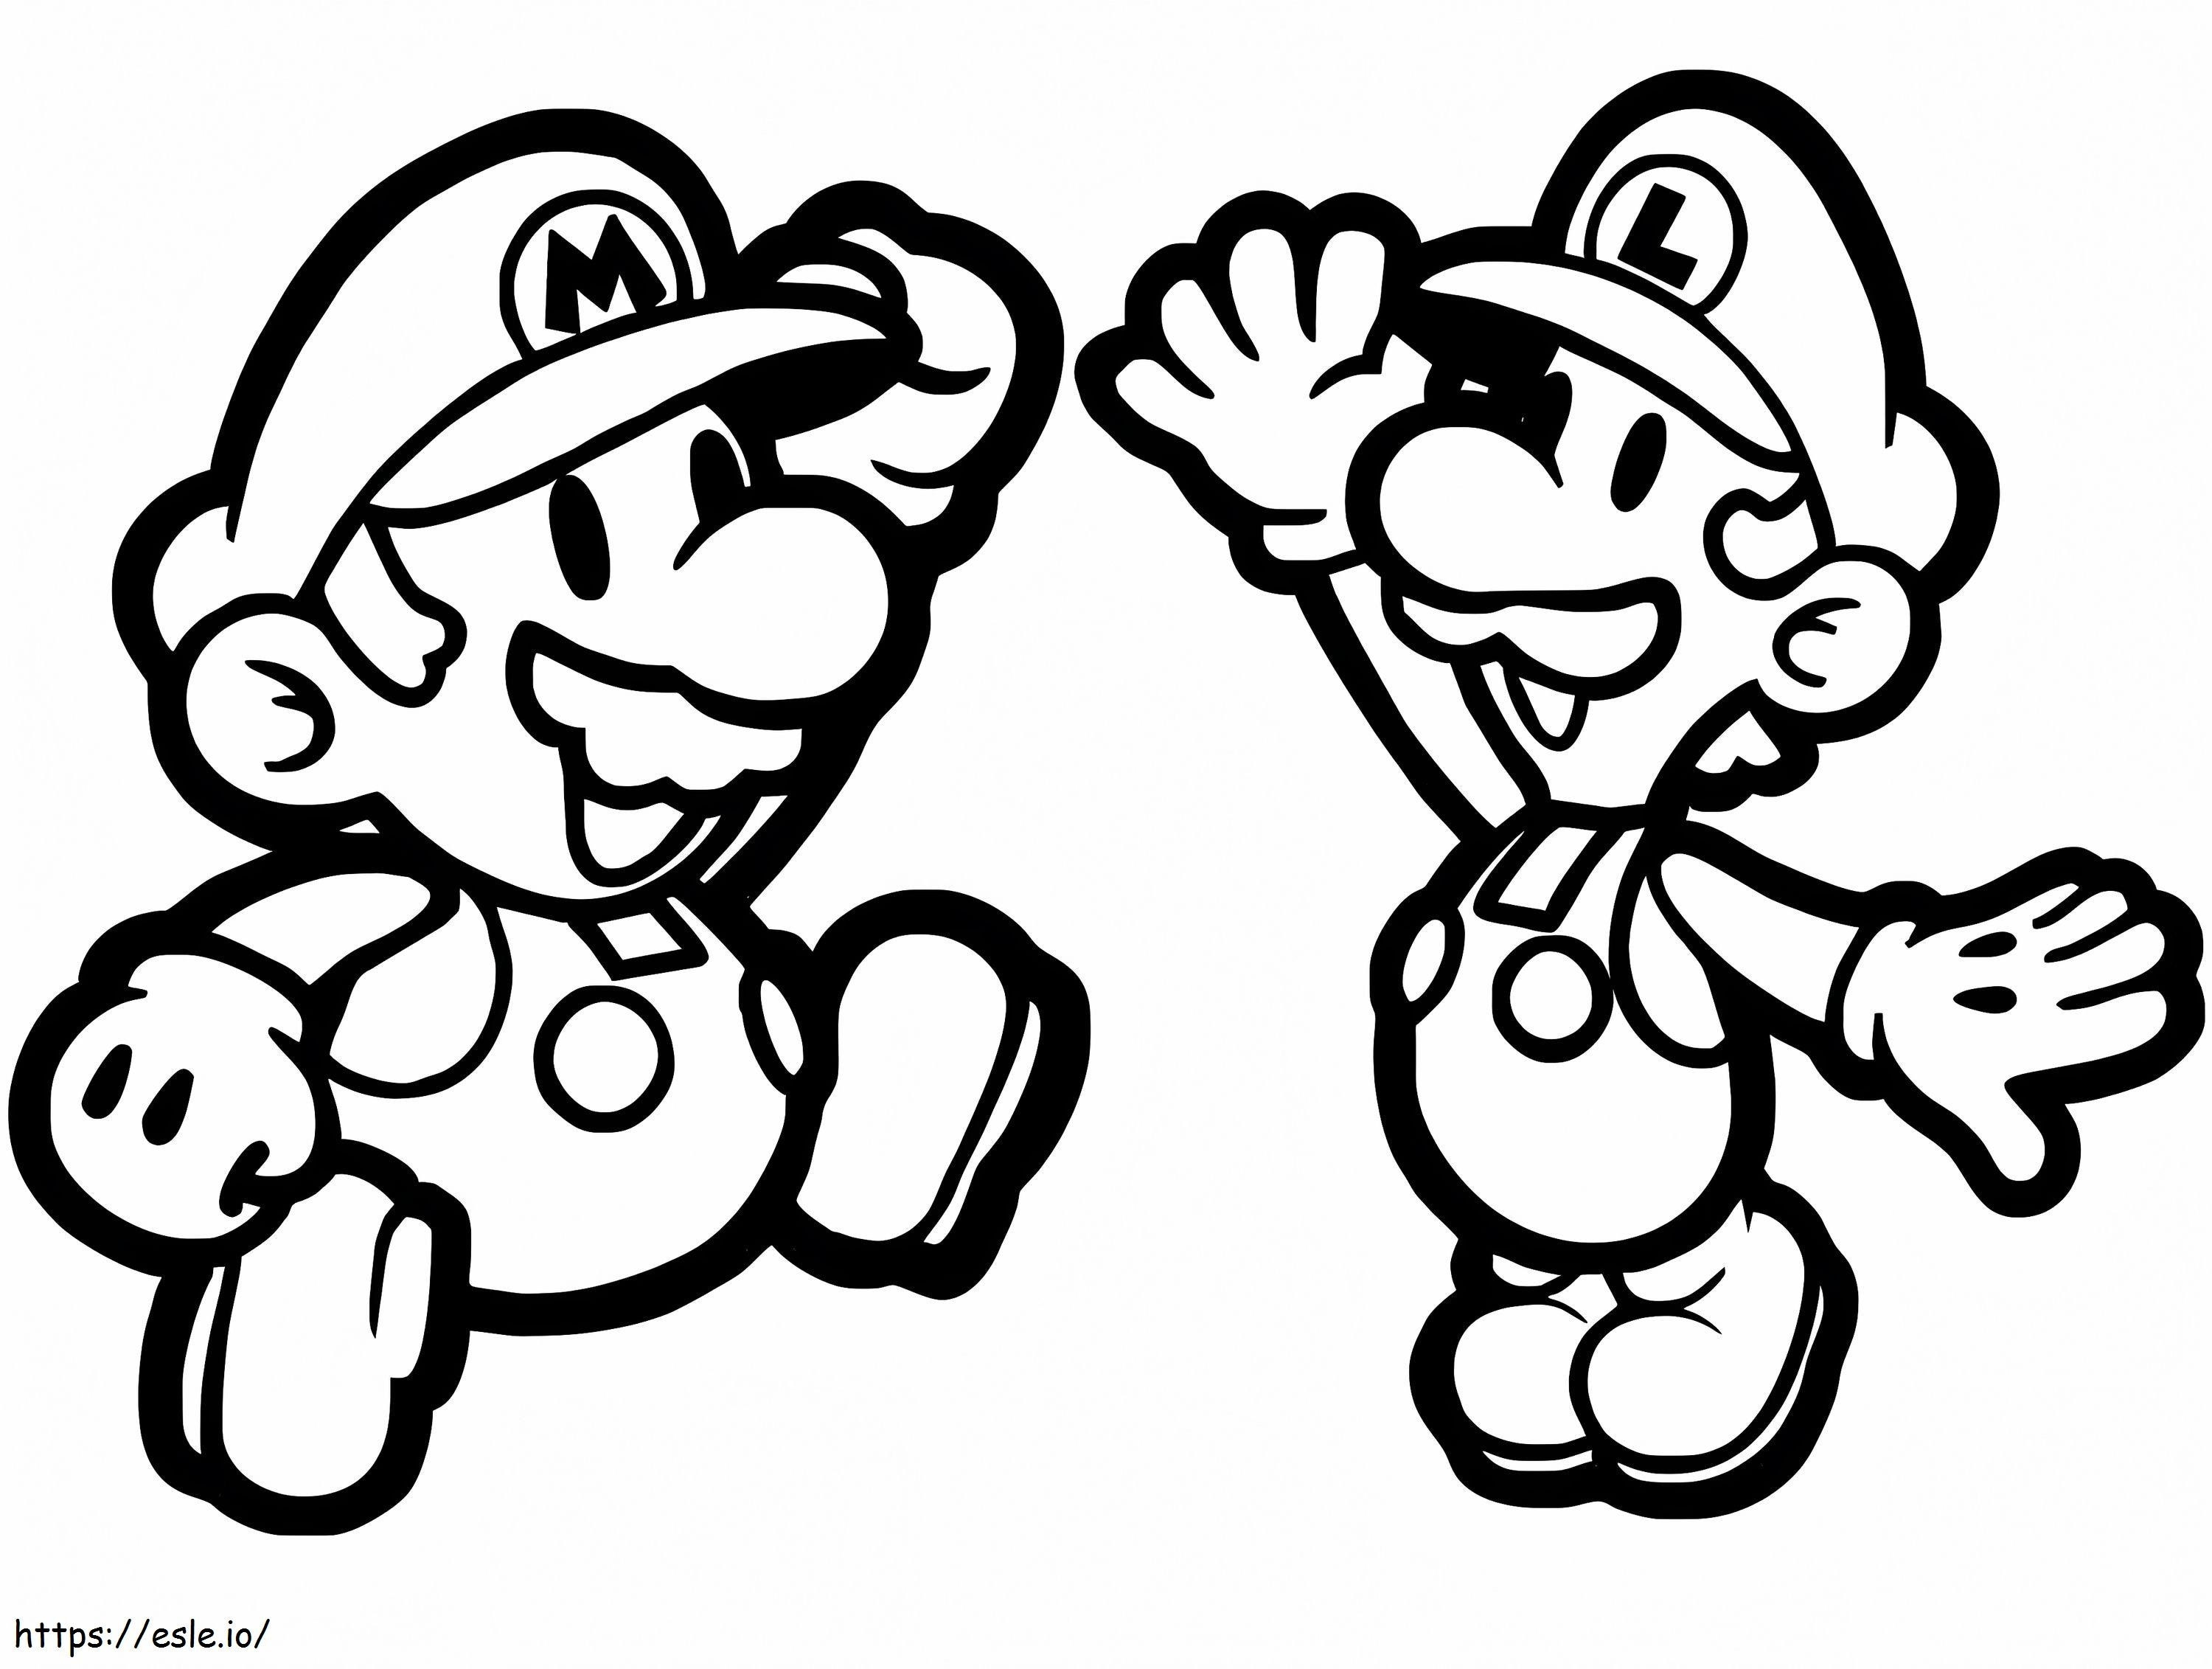 Paper Mario And Luigi coloring page